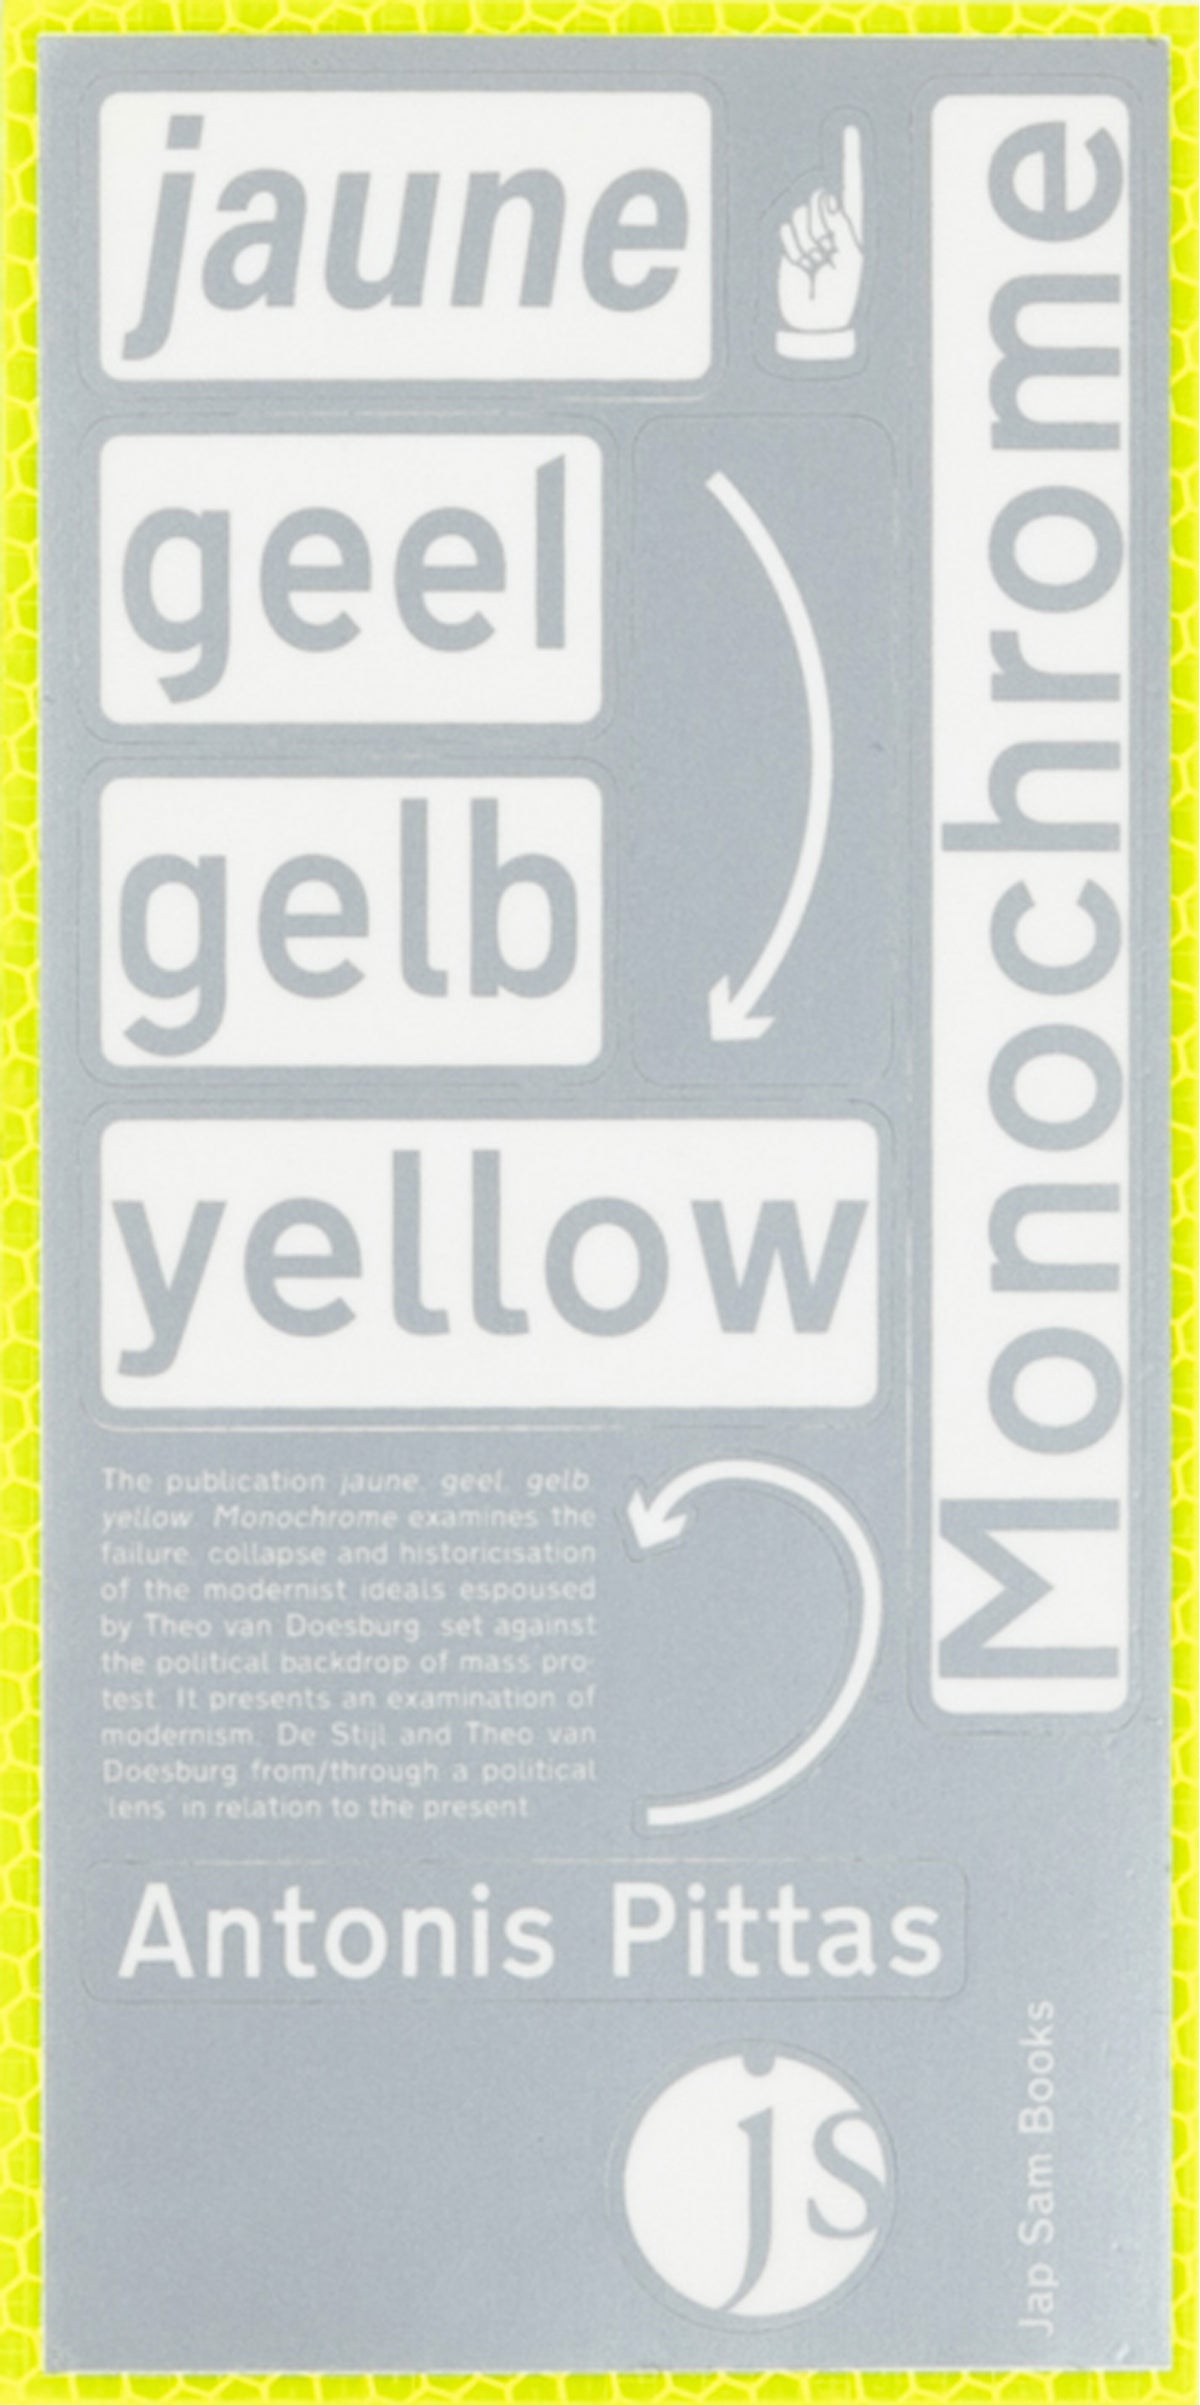 jaune, geel, gelb, yellow. Monochrome